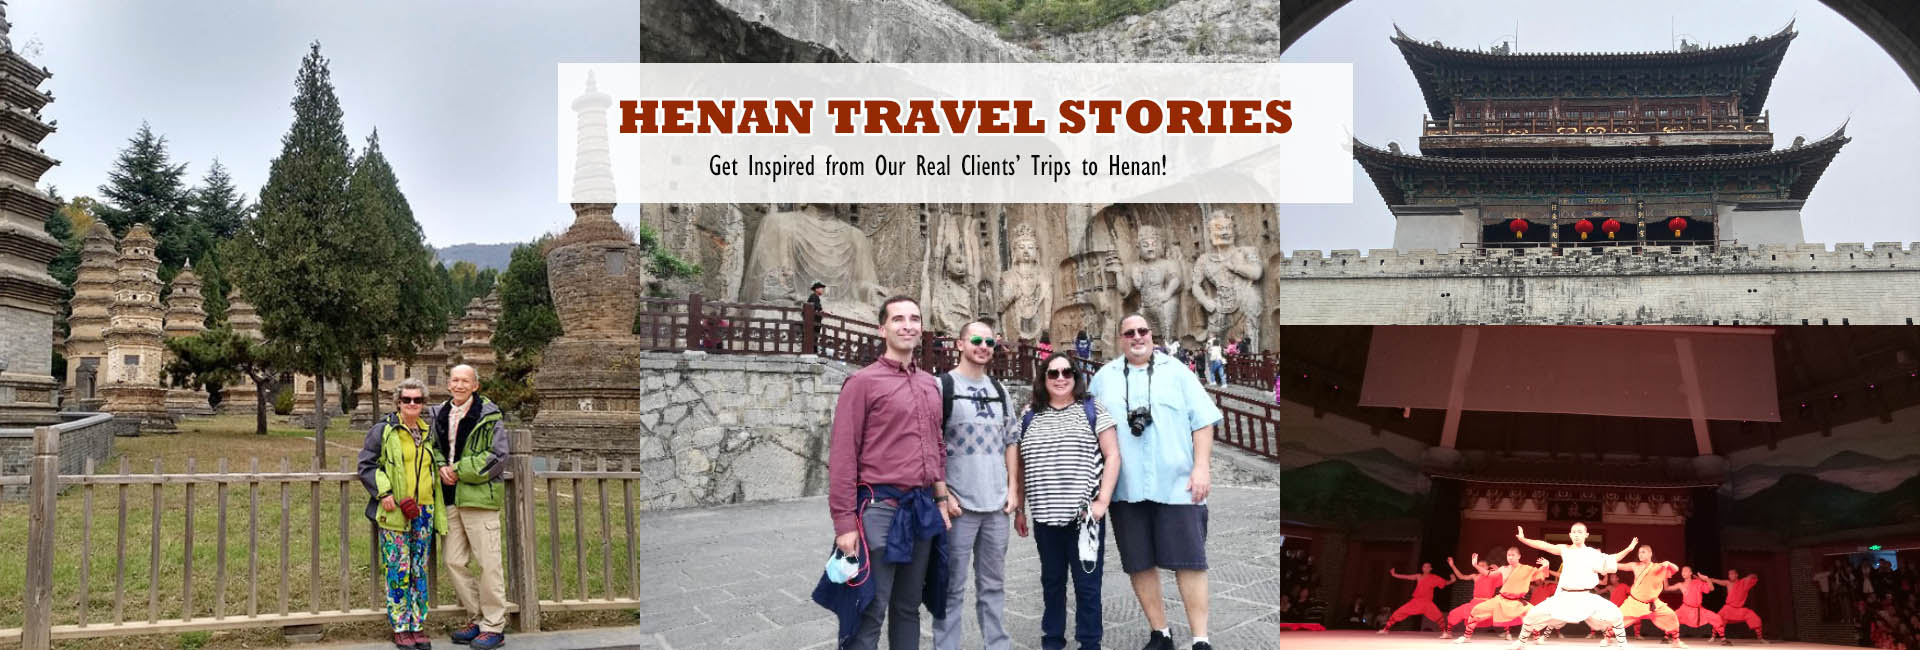 Henan Travel Stories